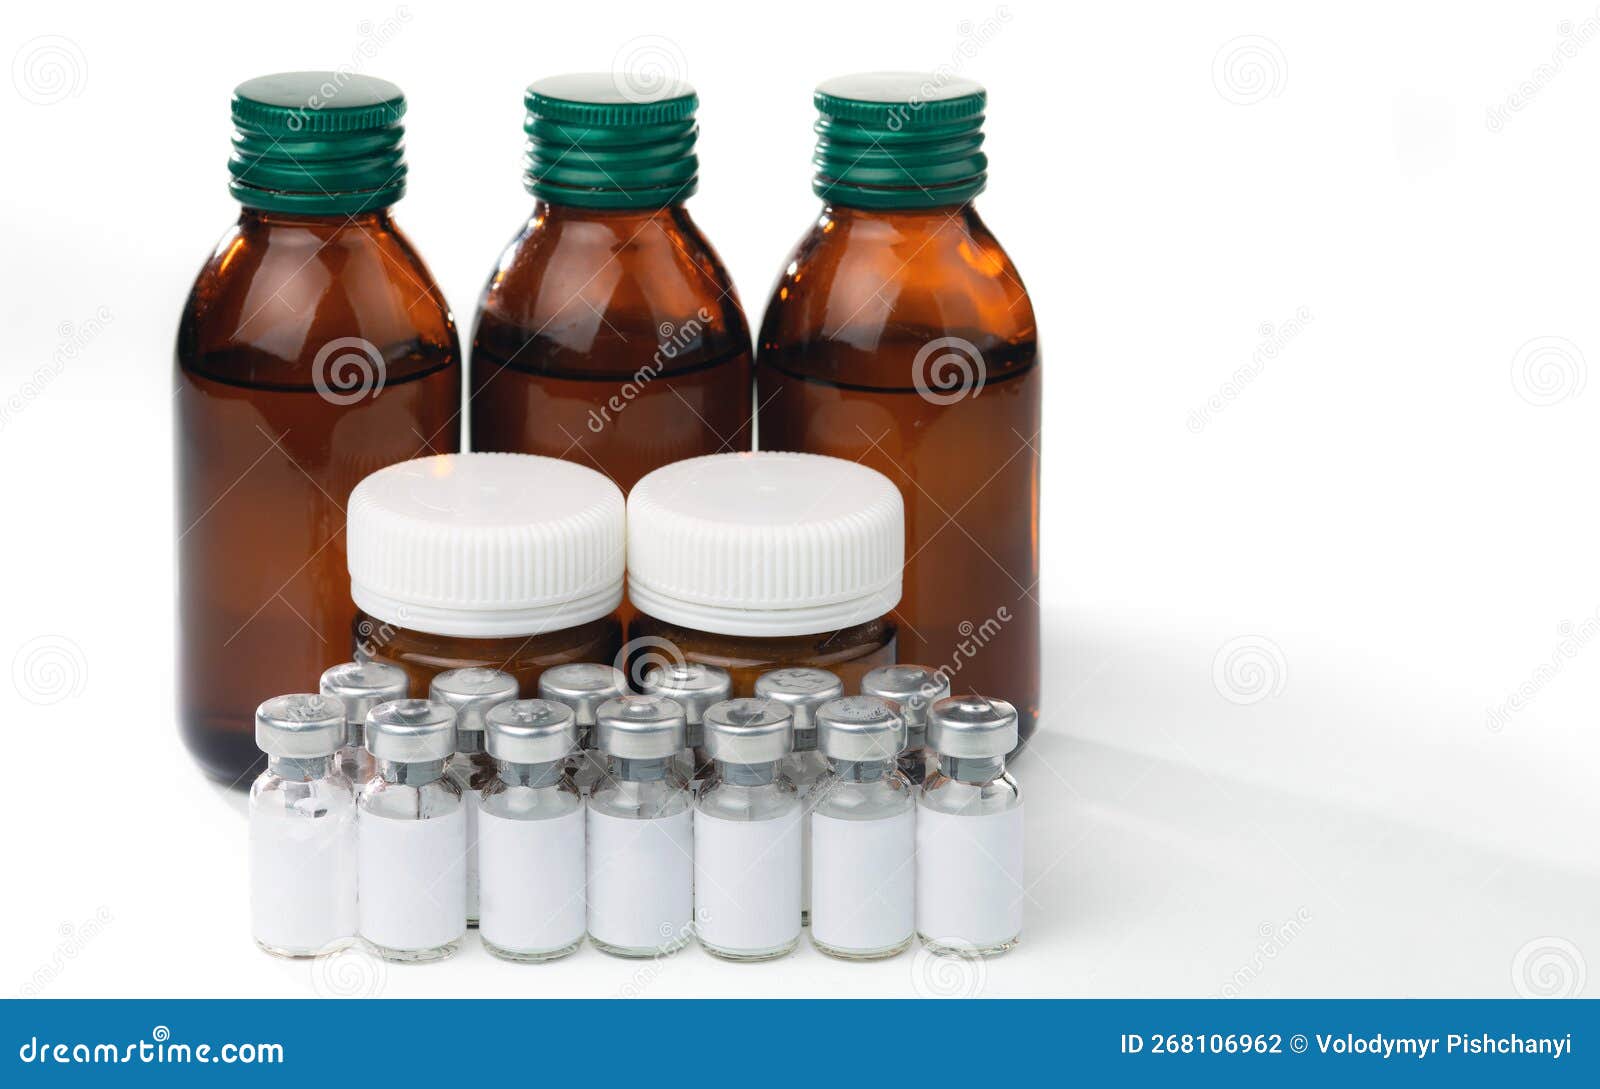 glass medical vials of biotech drugs